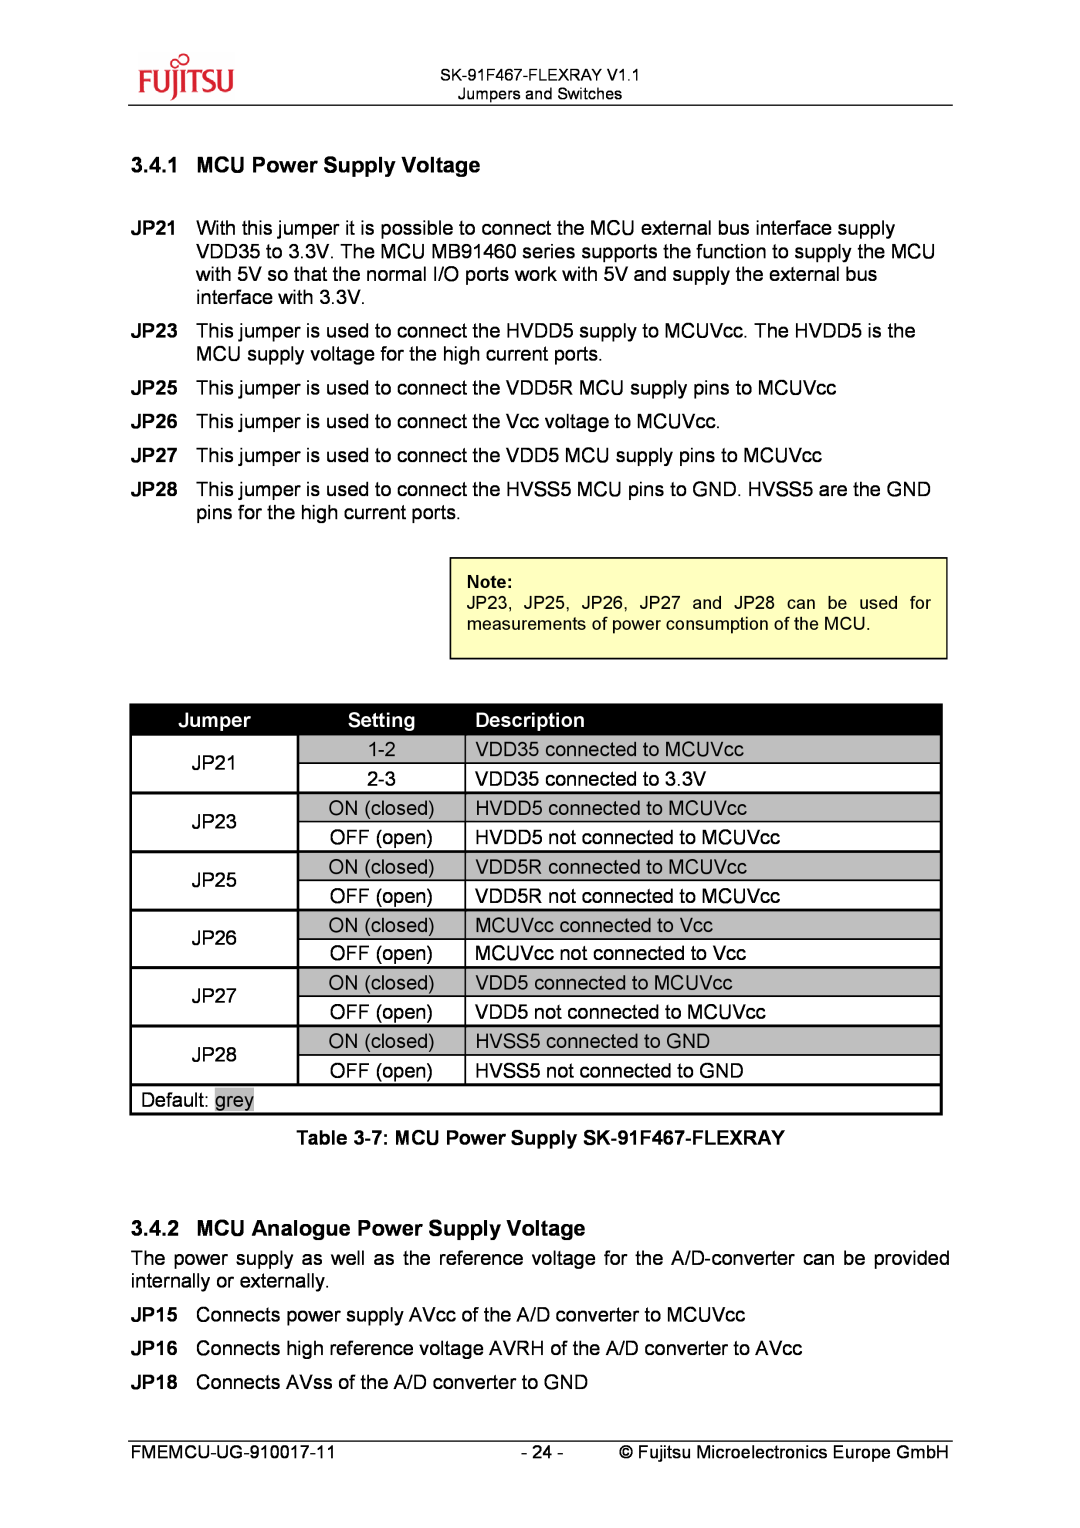 Fujitsu MB91460 SERIES MCU Power Supply Voltage, MCU Analogue Power Supply Voltage, 7 MCU Power Supply SK-91F467-FLEXRAY 